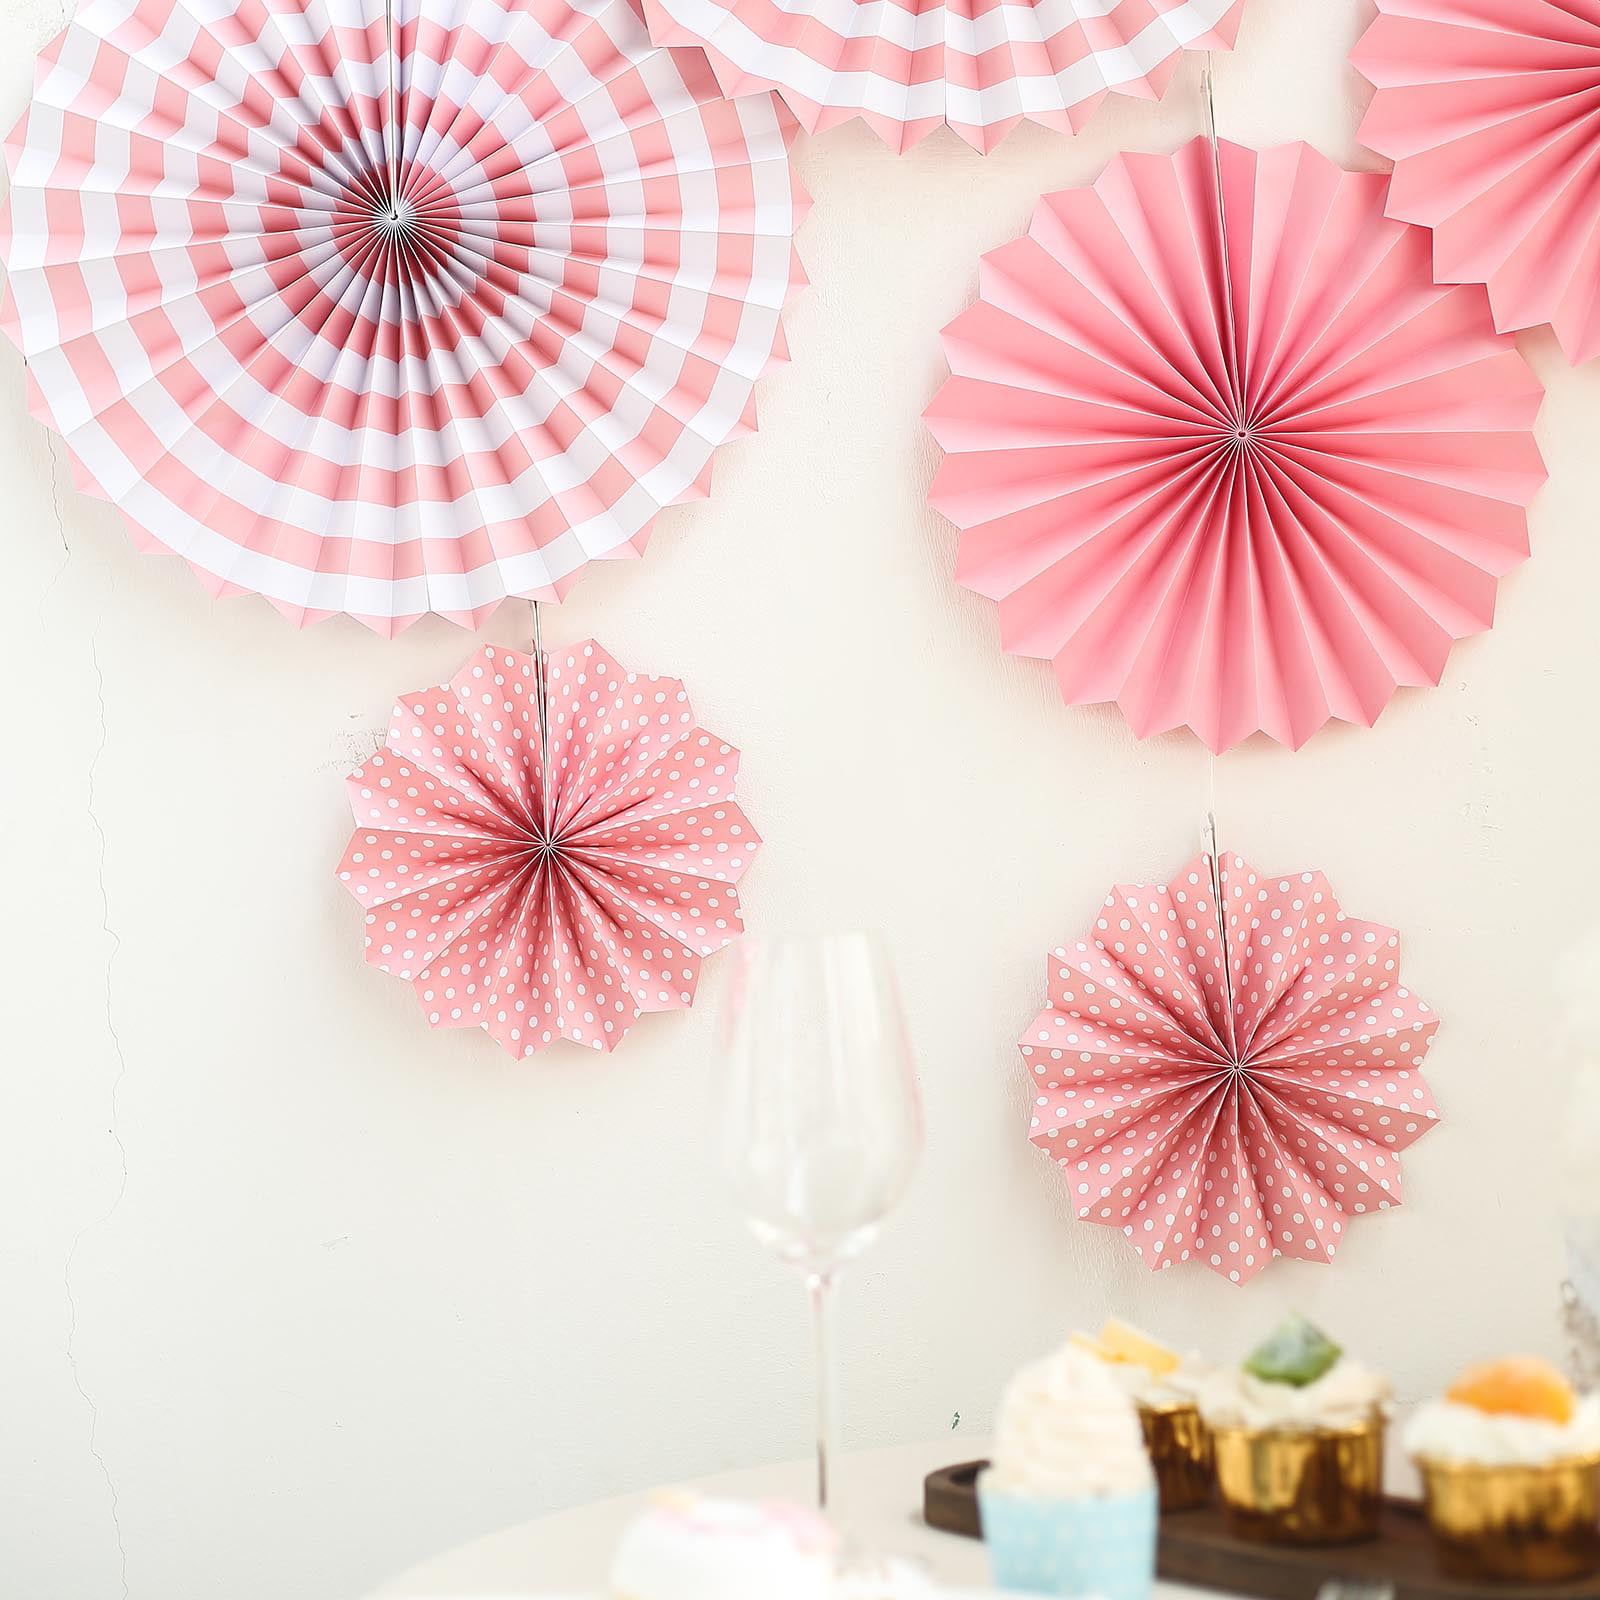 6 Piece Vibrant Hanging Paper Fans Backdrop Novelty Place